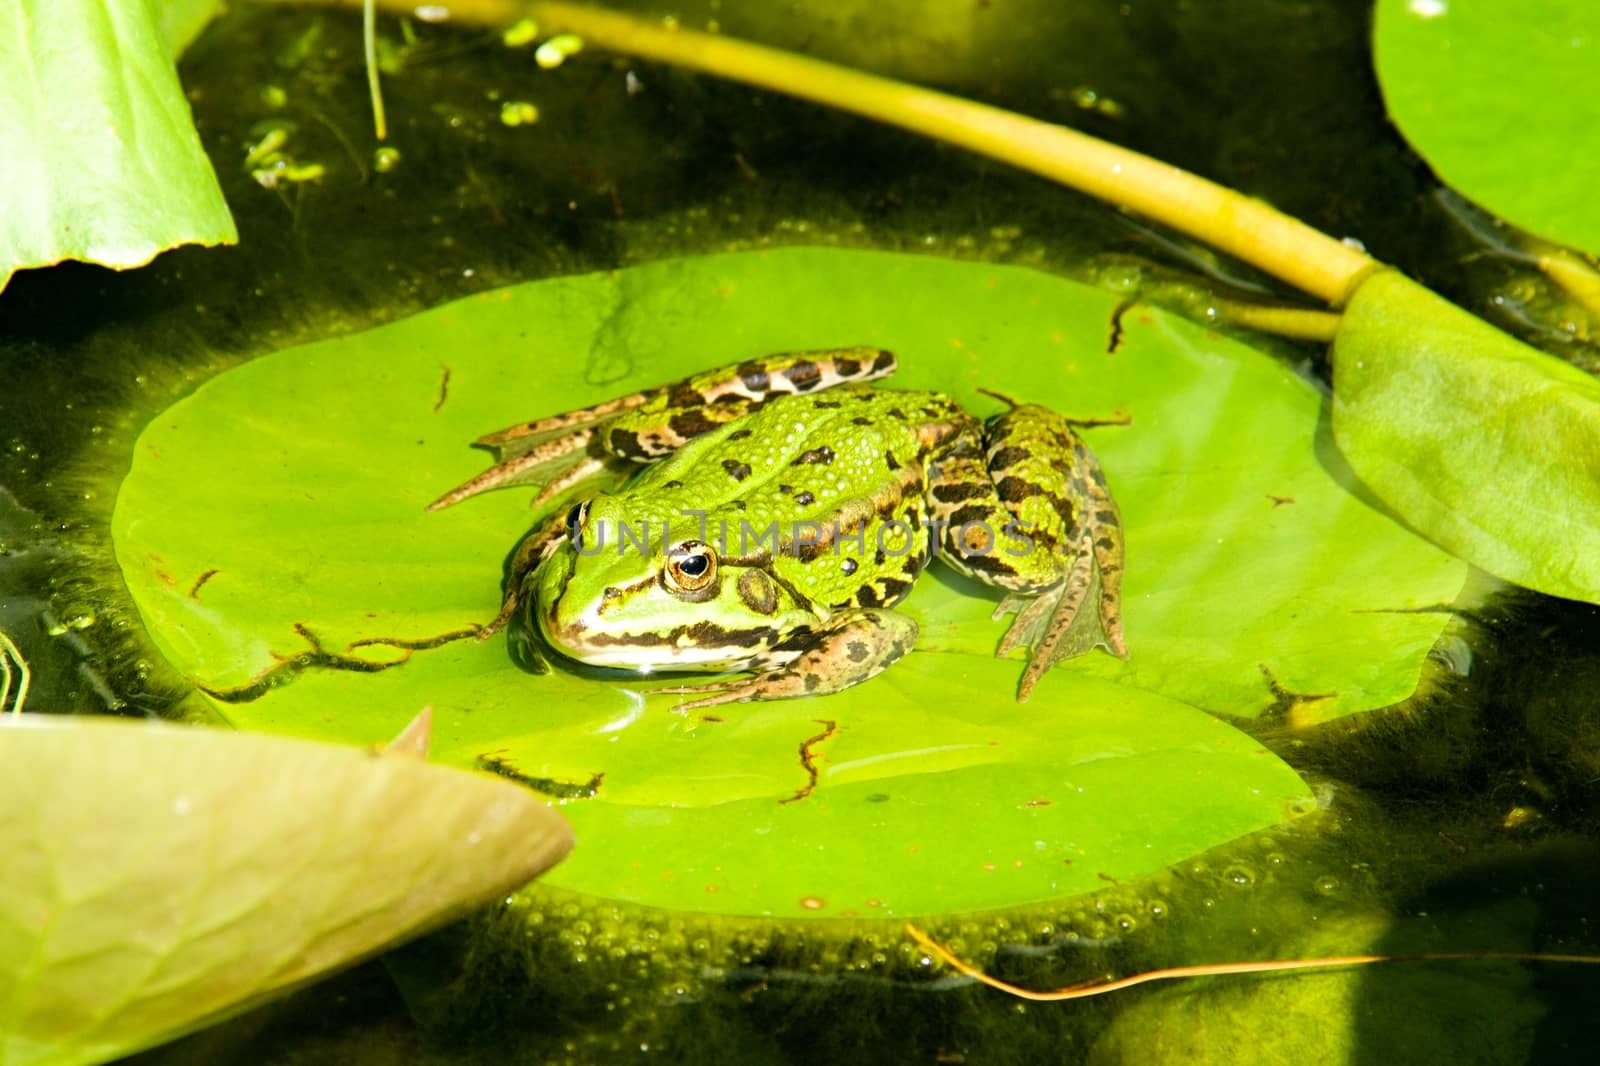 Frog on the leaf by Dermot68